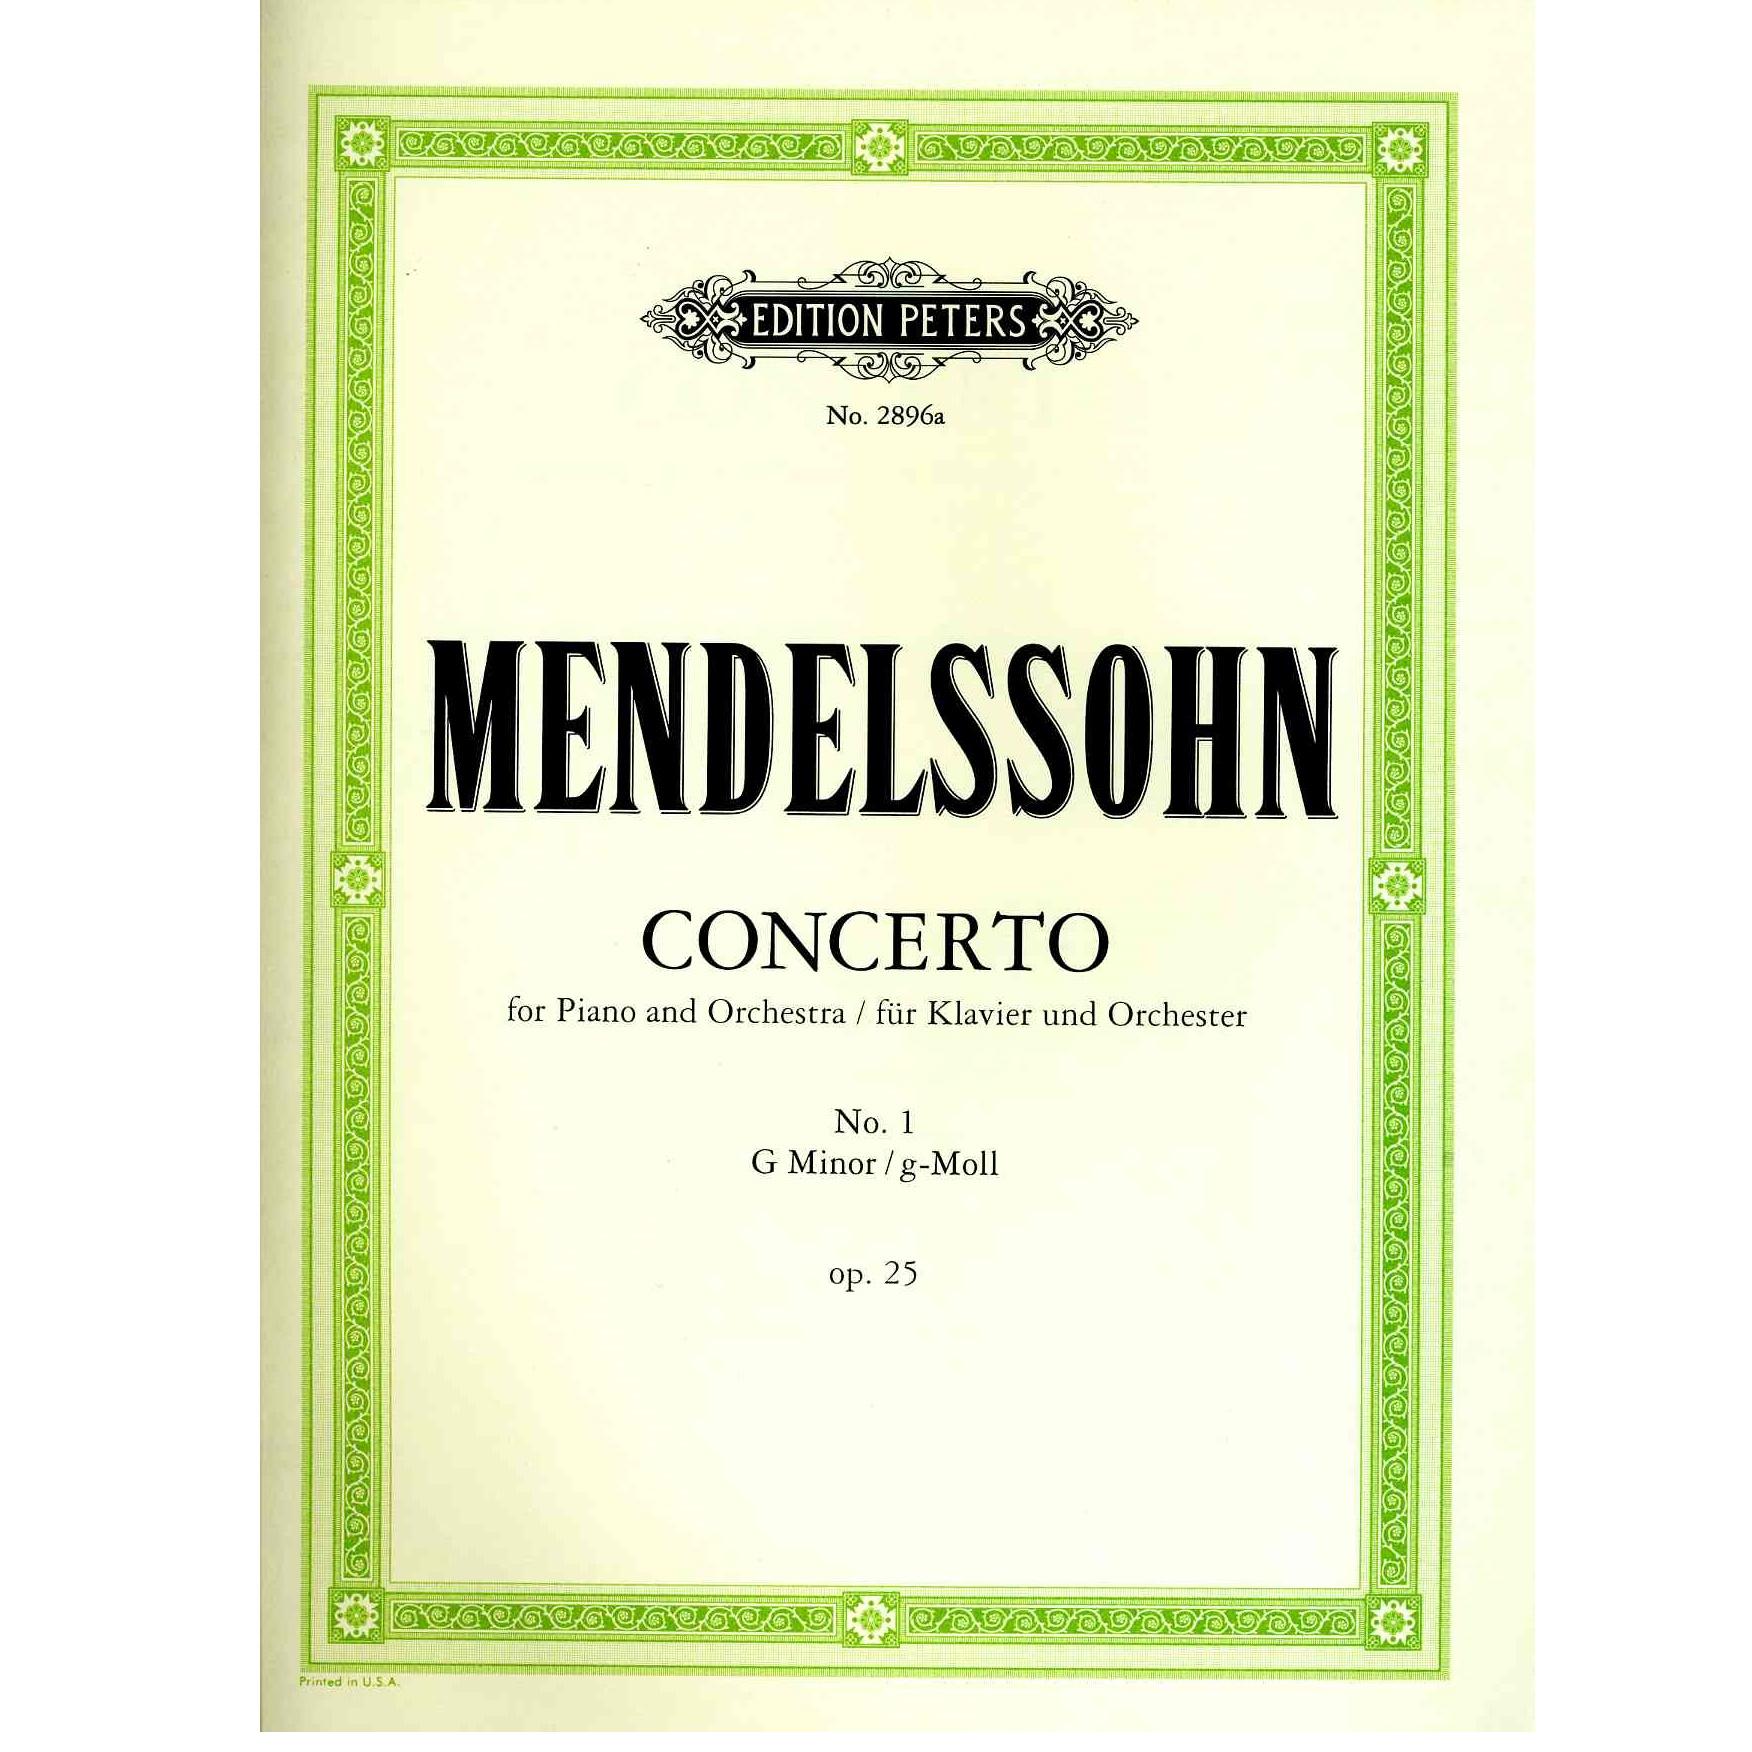 Mendelssohn Concerto per piano e orchestra n. 1 G minor Op. 25 - Edition Peters